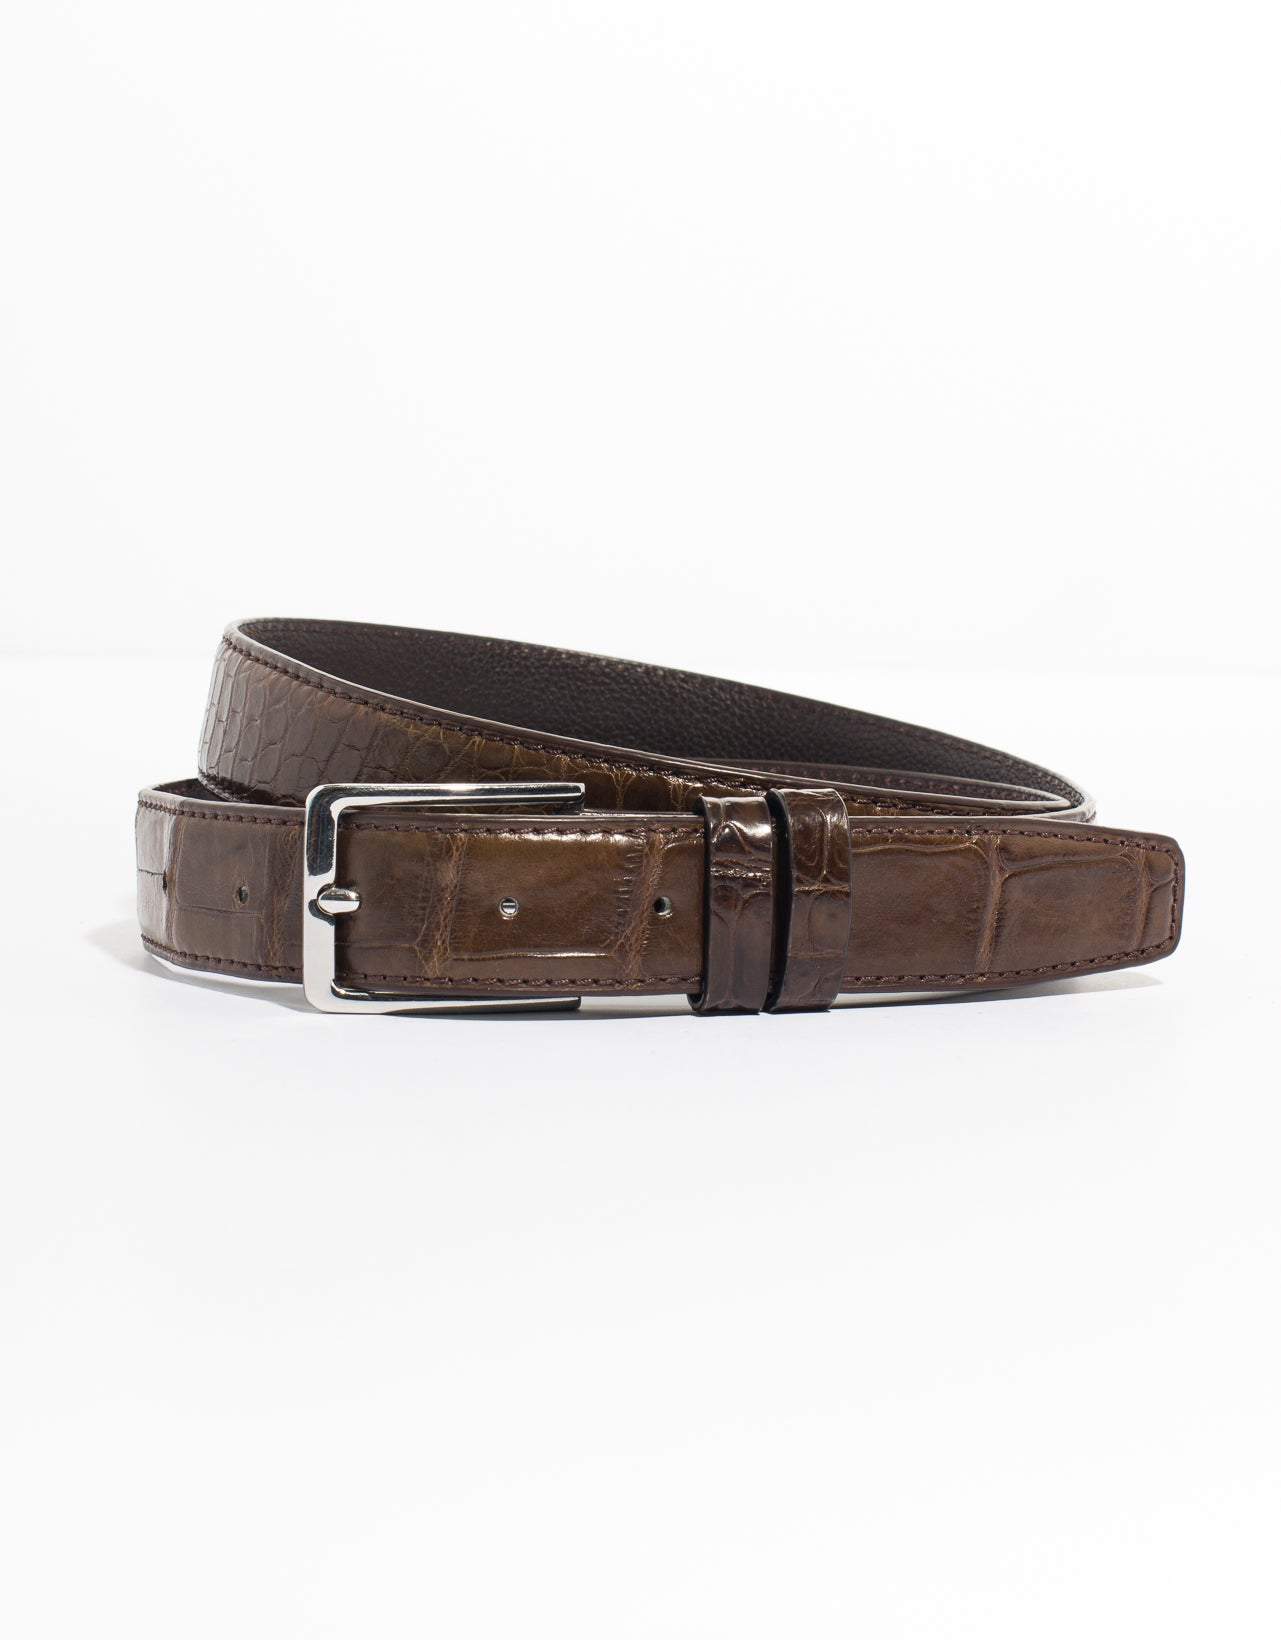 Black With Gold Italian Leather Belt | Men's Dress Belts - J. Press – J ...